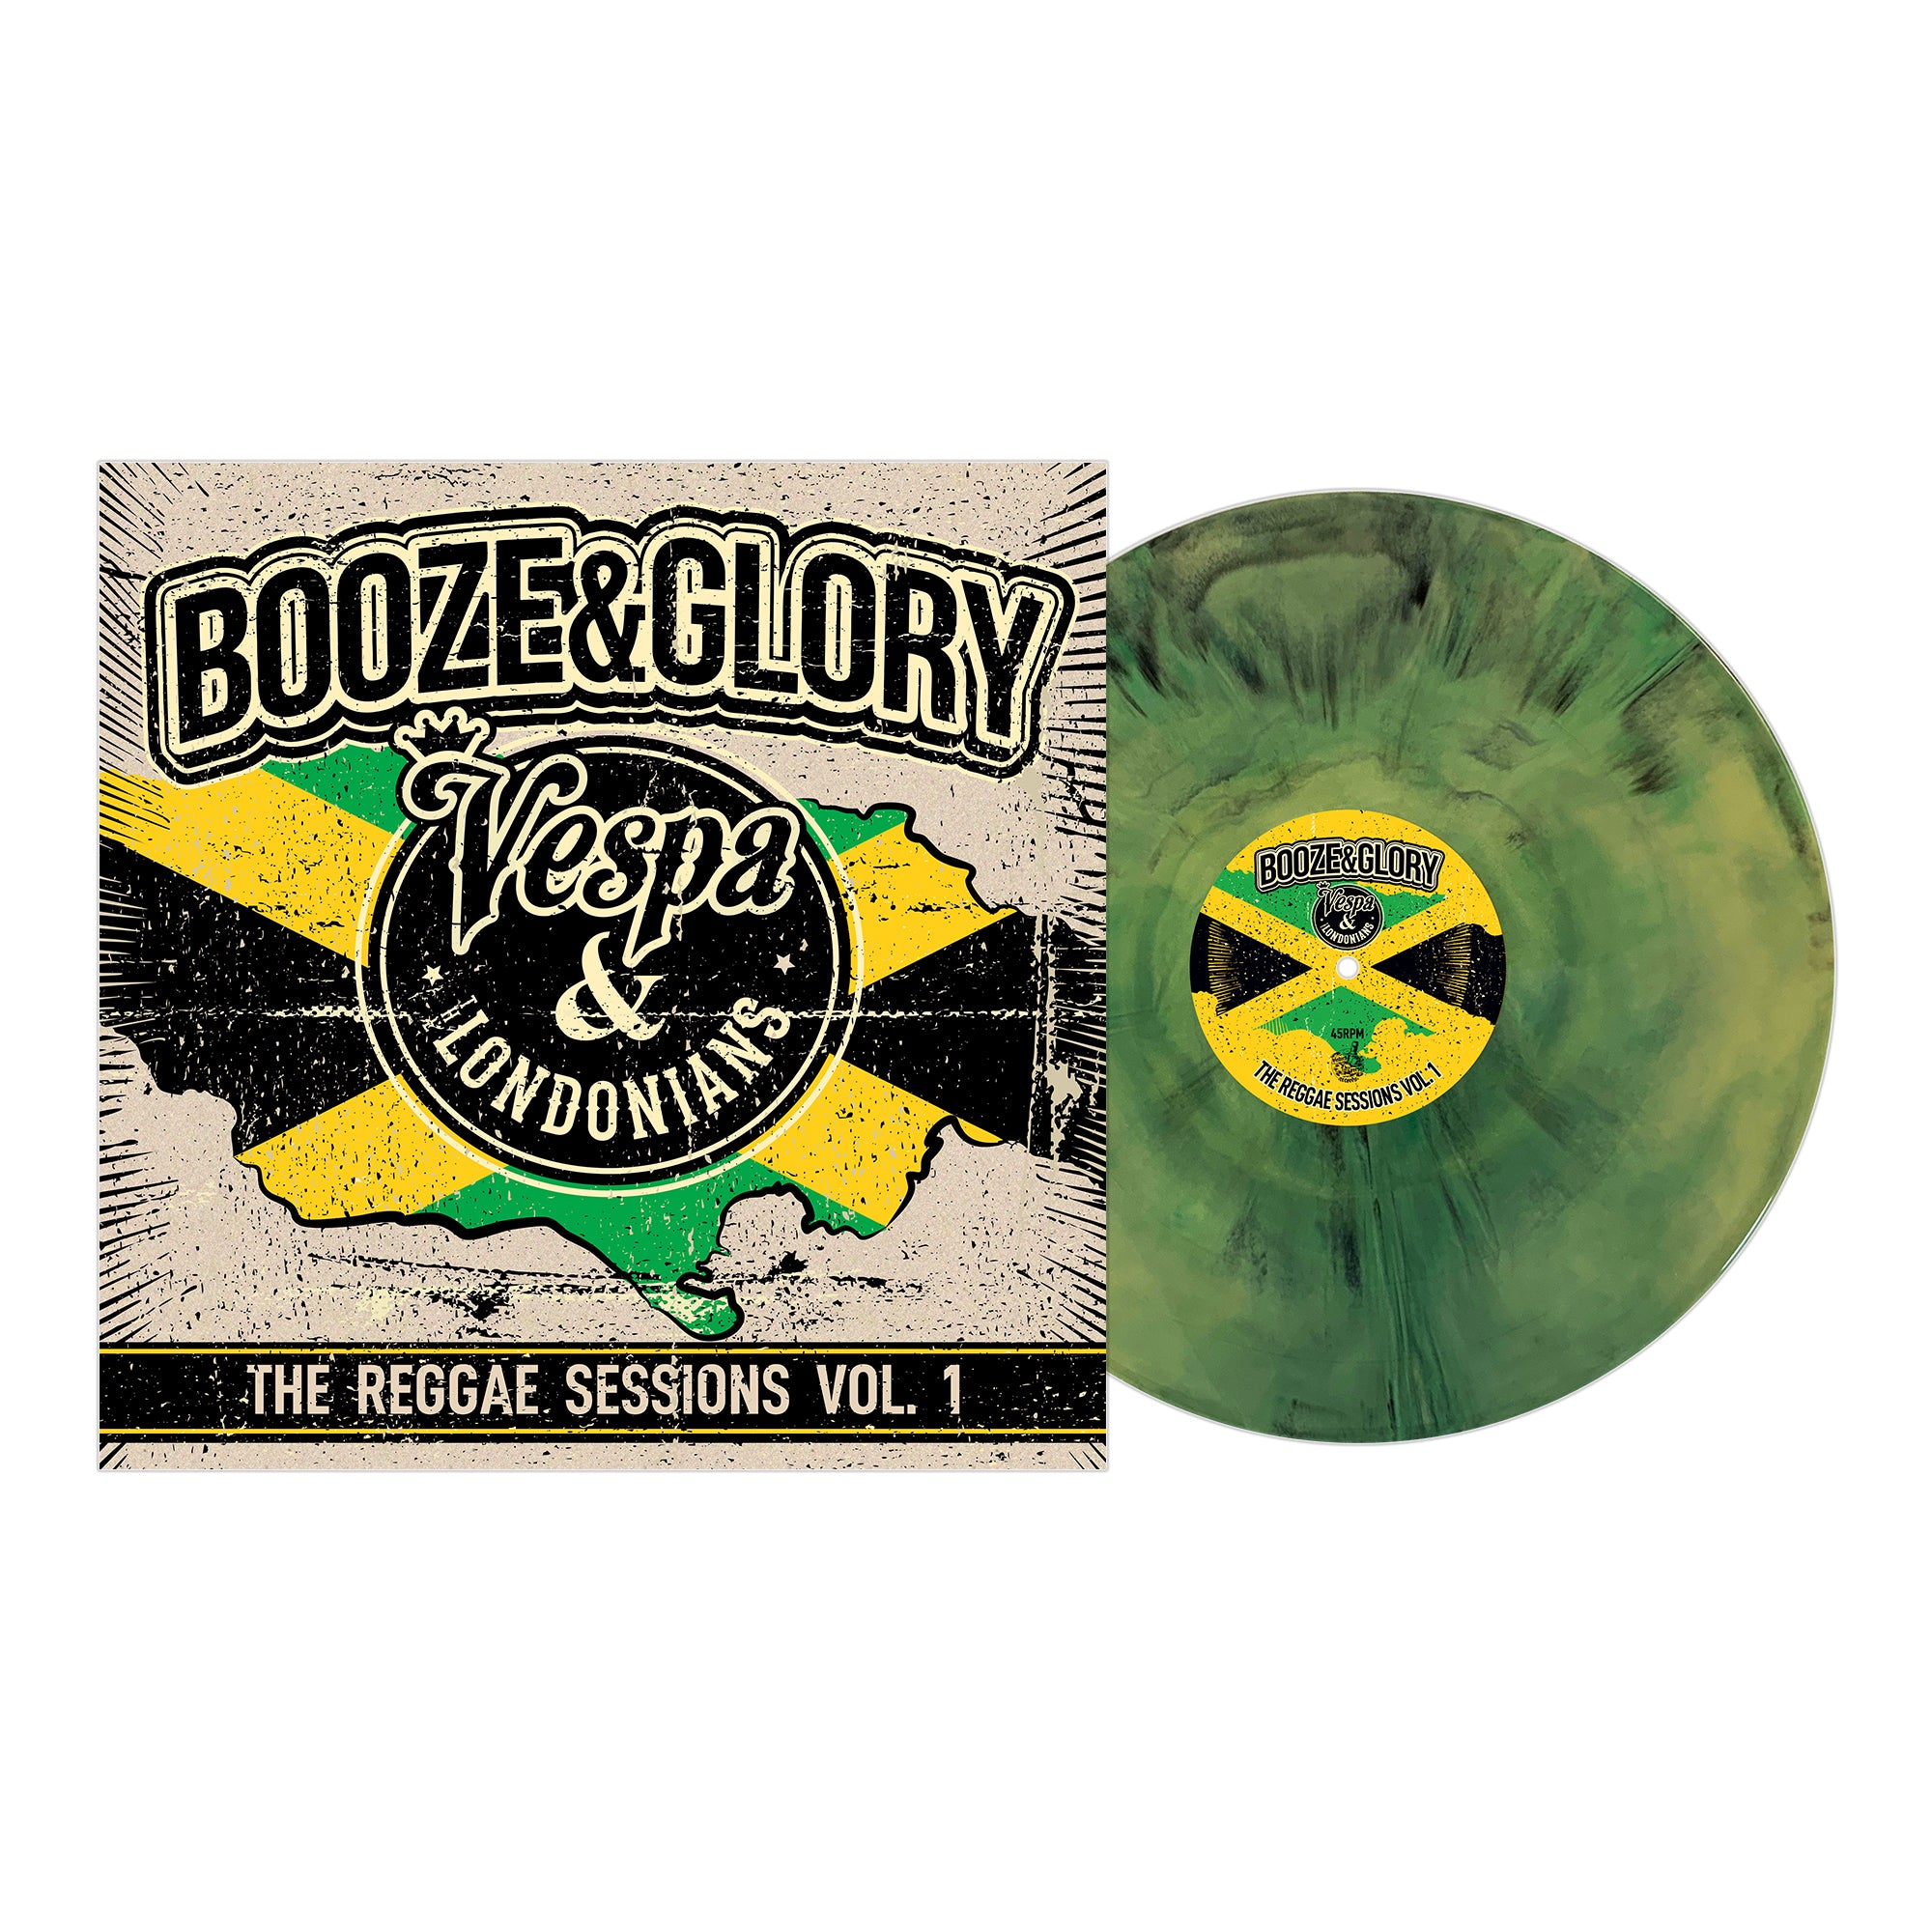 Booze & Glory - The Reggae Sessions Vol. 1 - Black, Green & Mustard Galaxy Vinyl LP